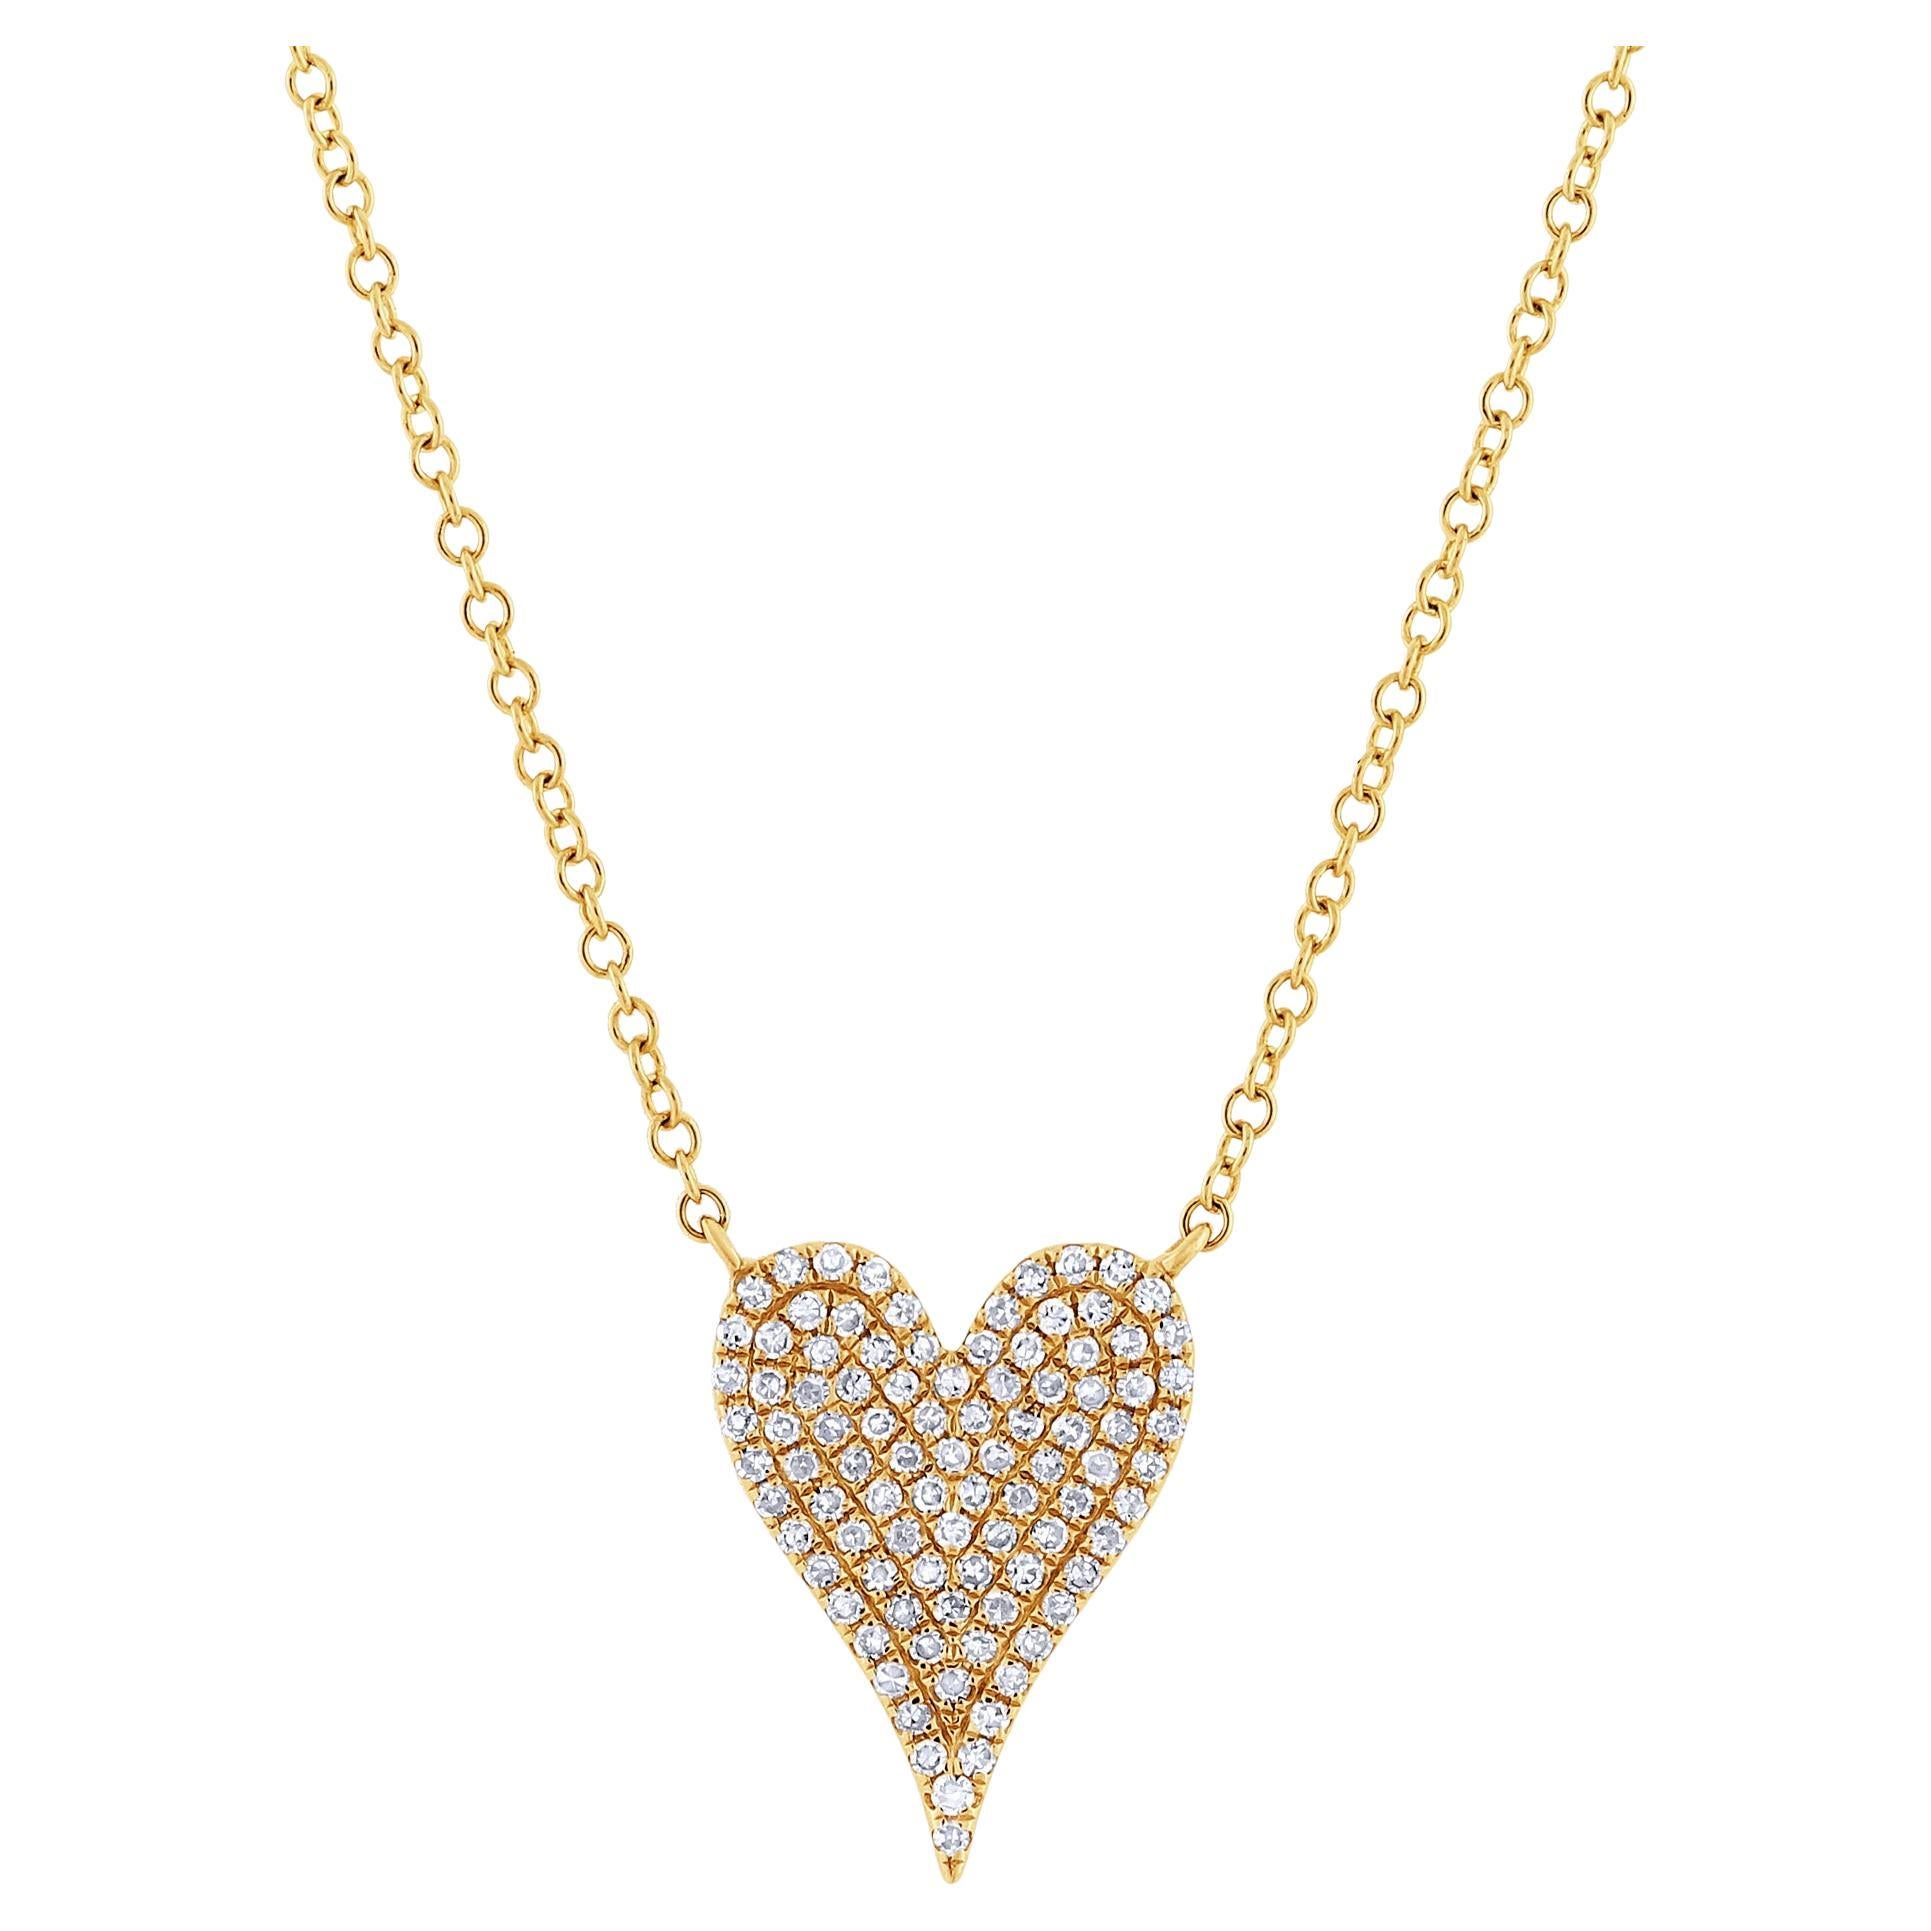 Rachel Koen Pave Diamond Heart Pendant Necklace 14K Yellow Gold 0.21cttw For Sale